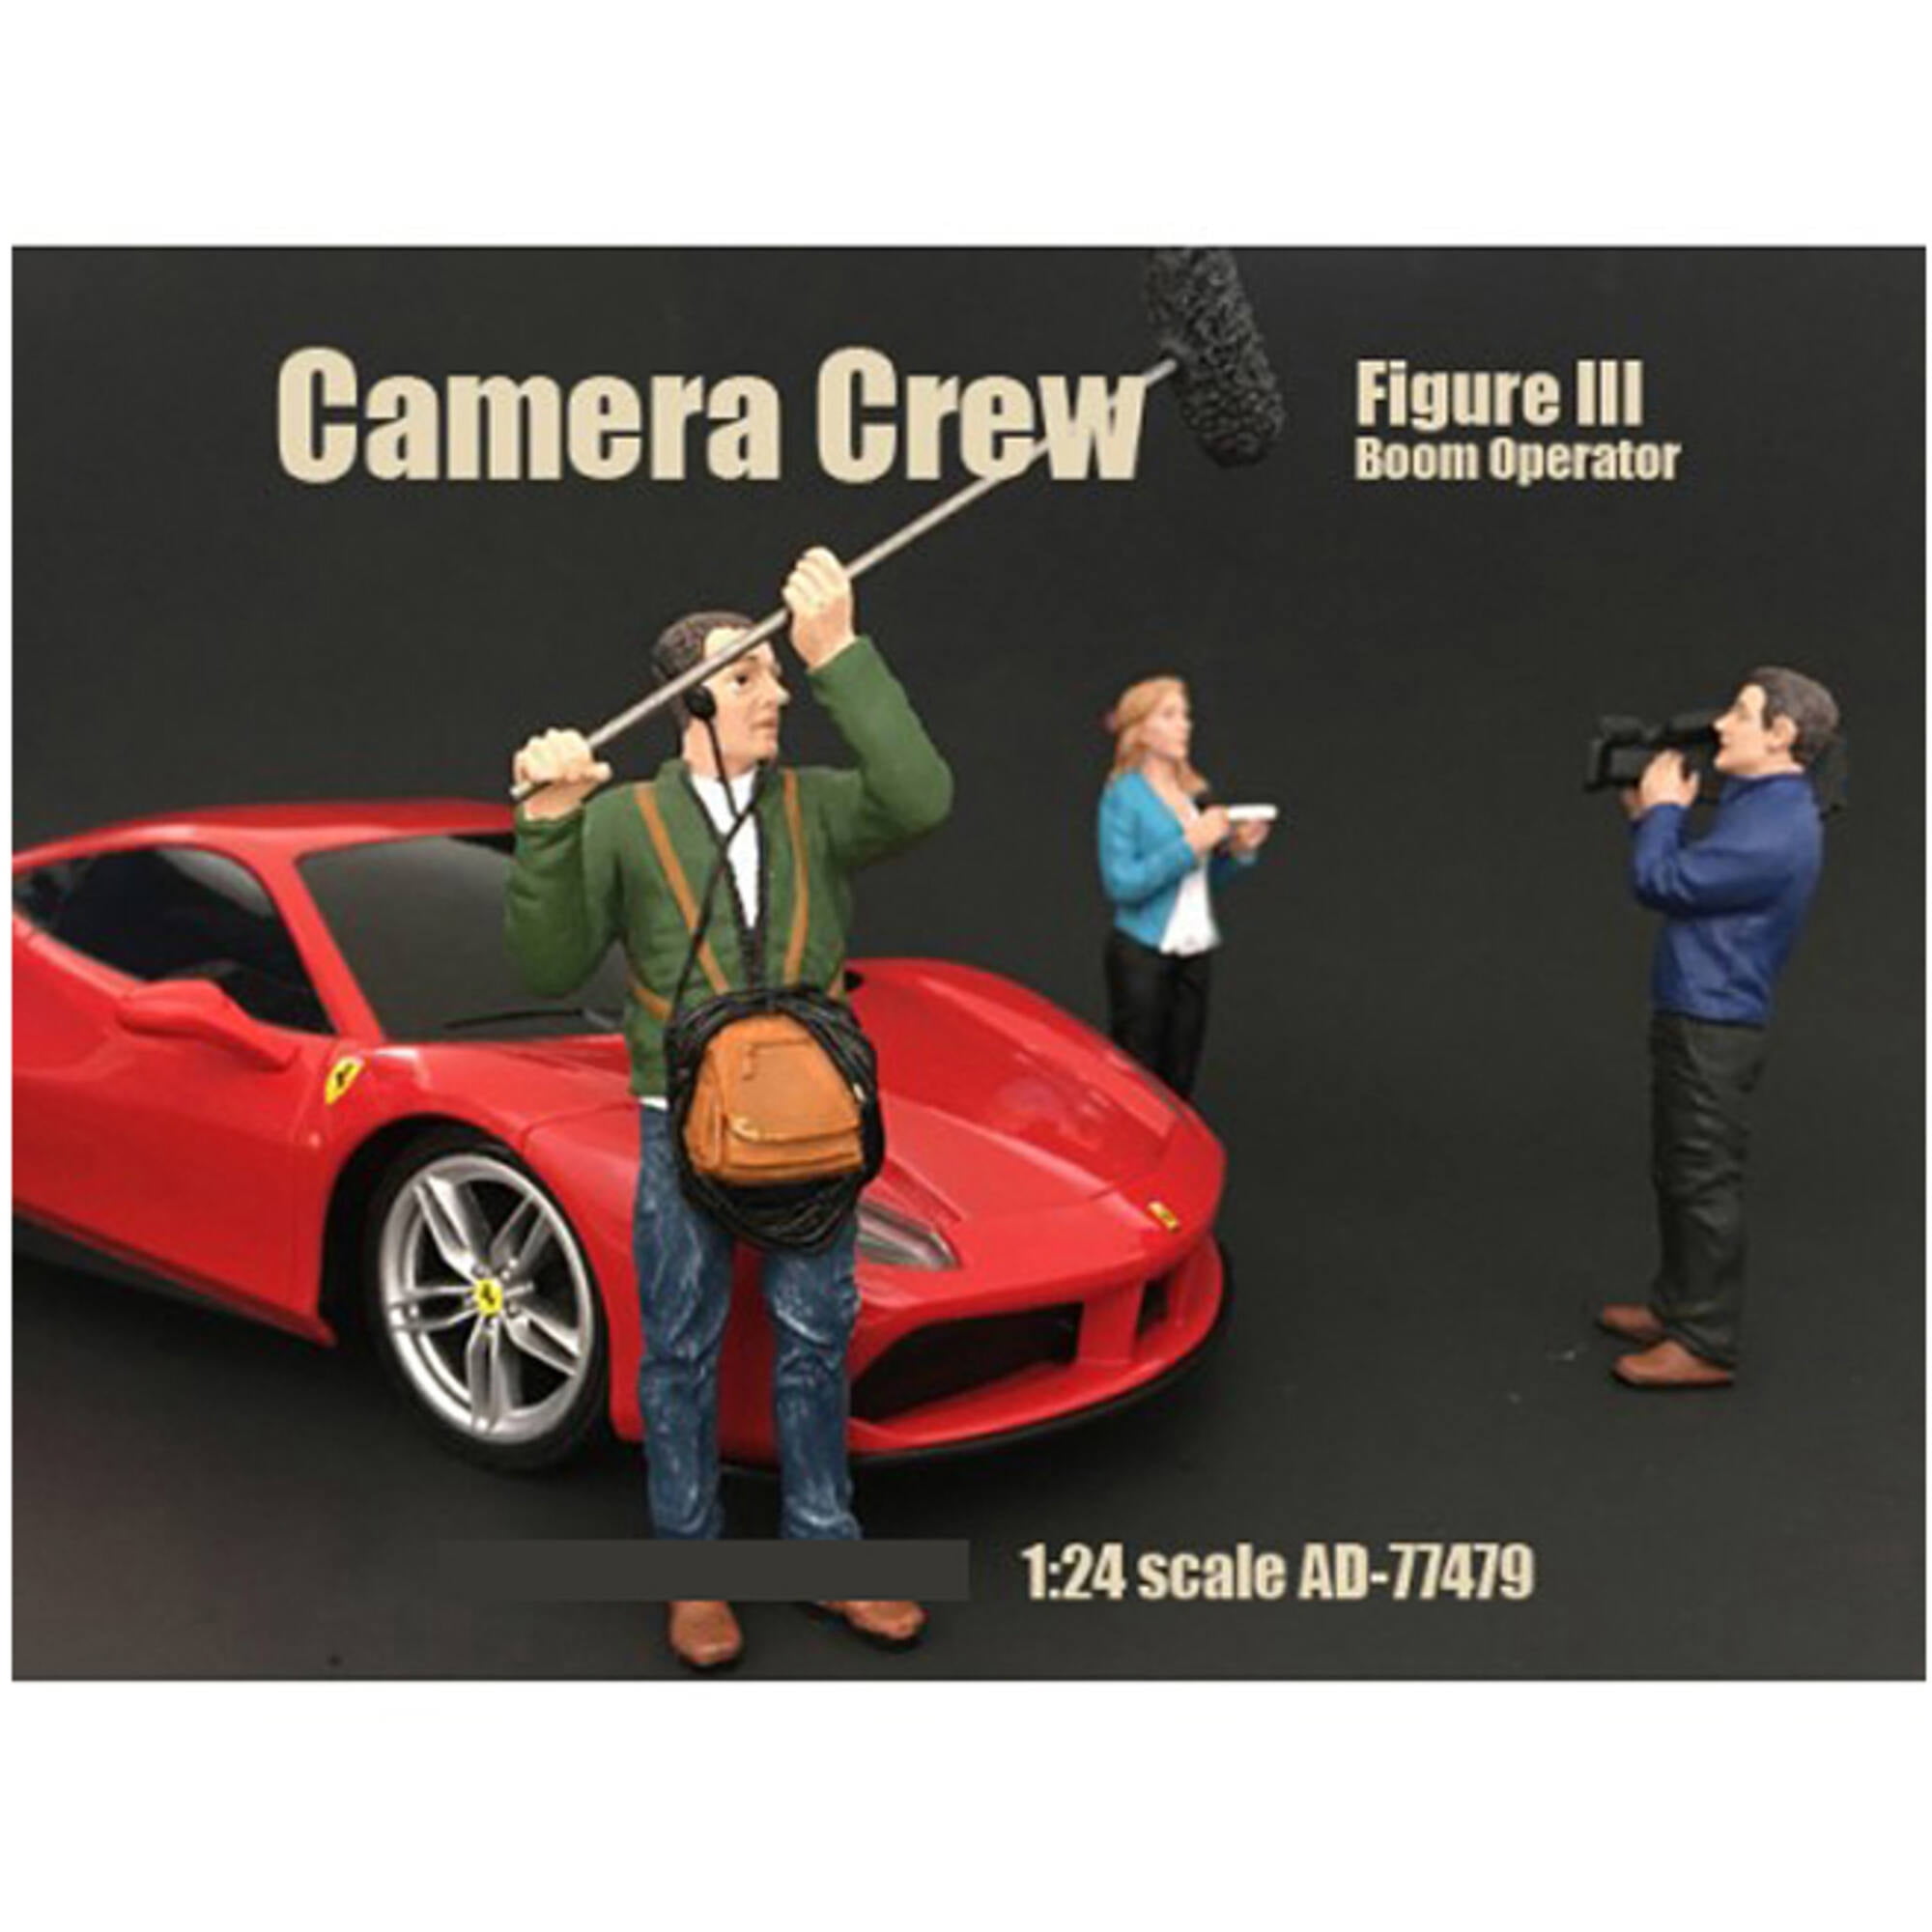 77479 Camera Crew Figure Iii Boom Operator For 1-24 Scale Models